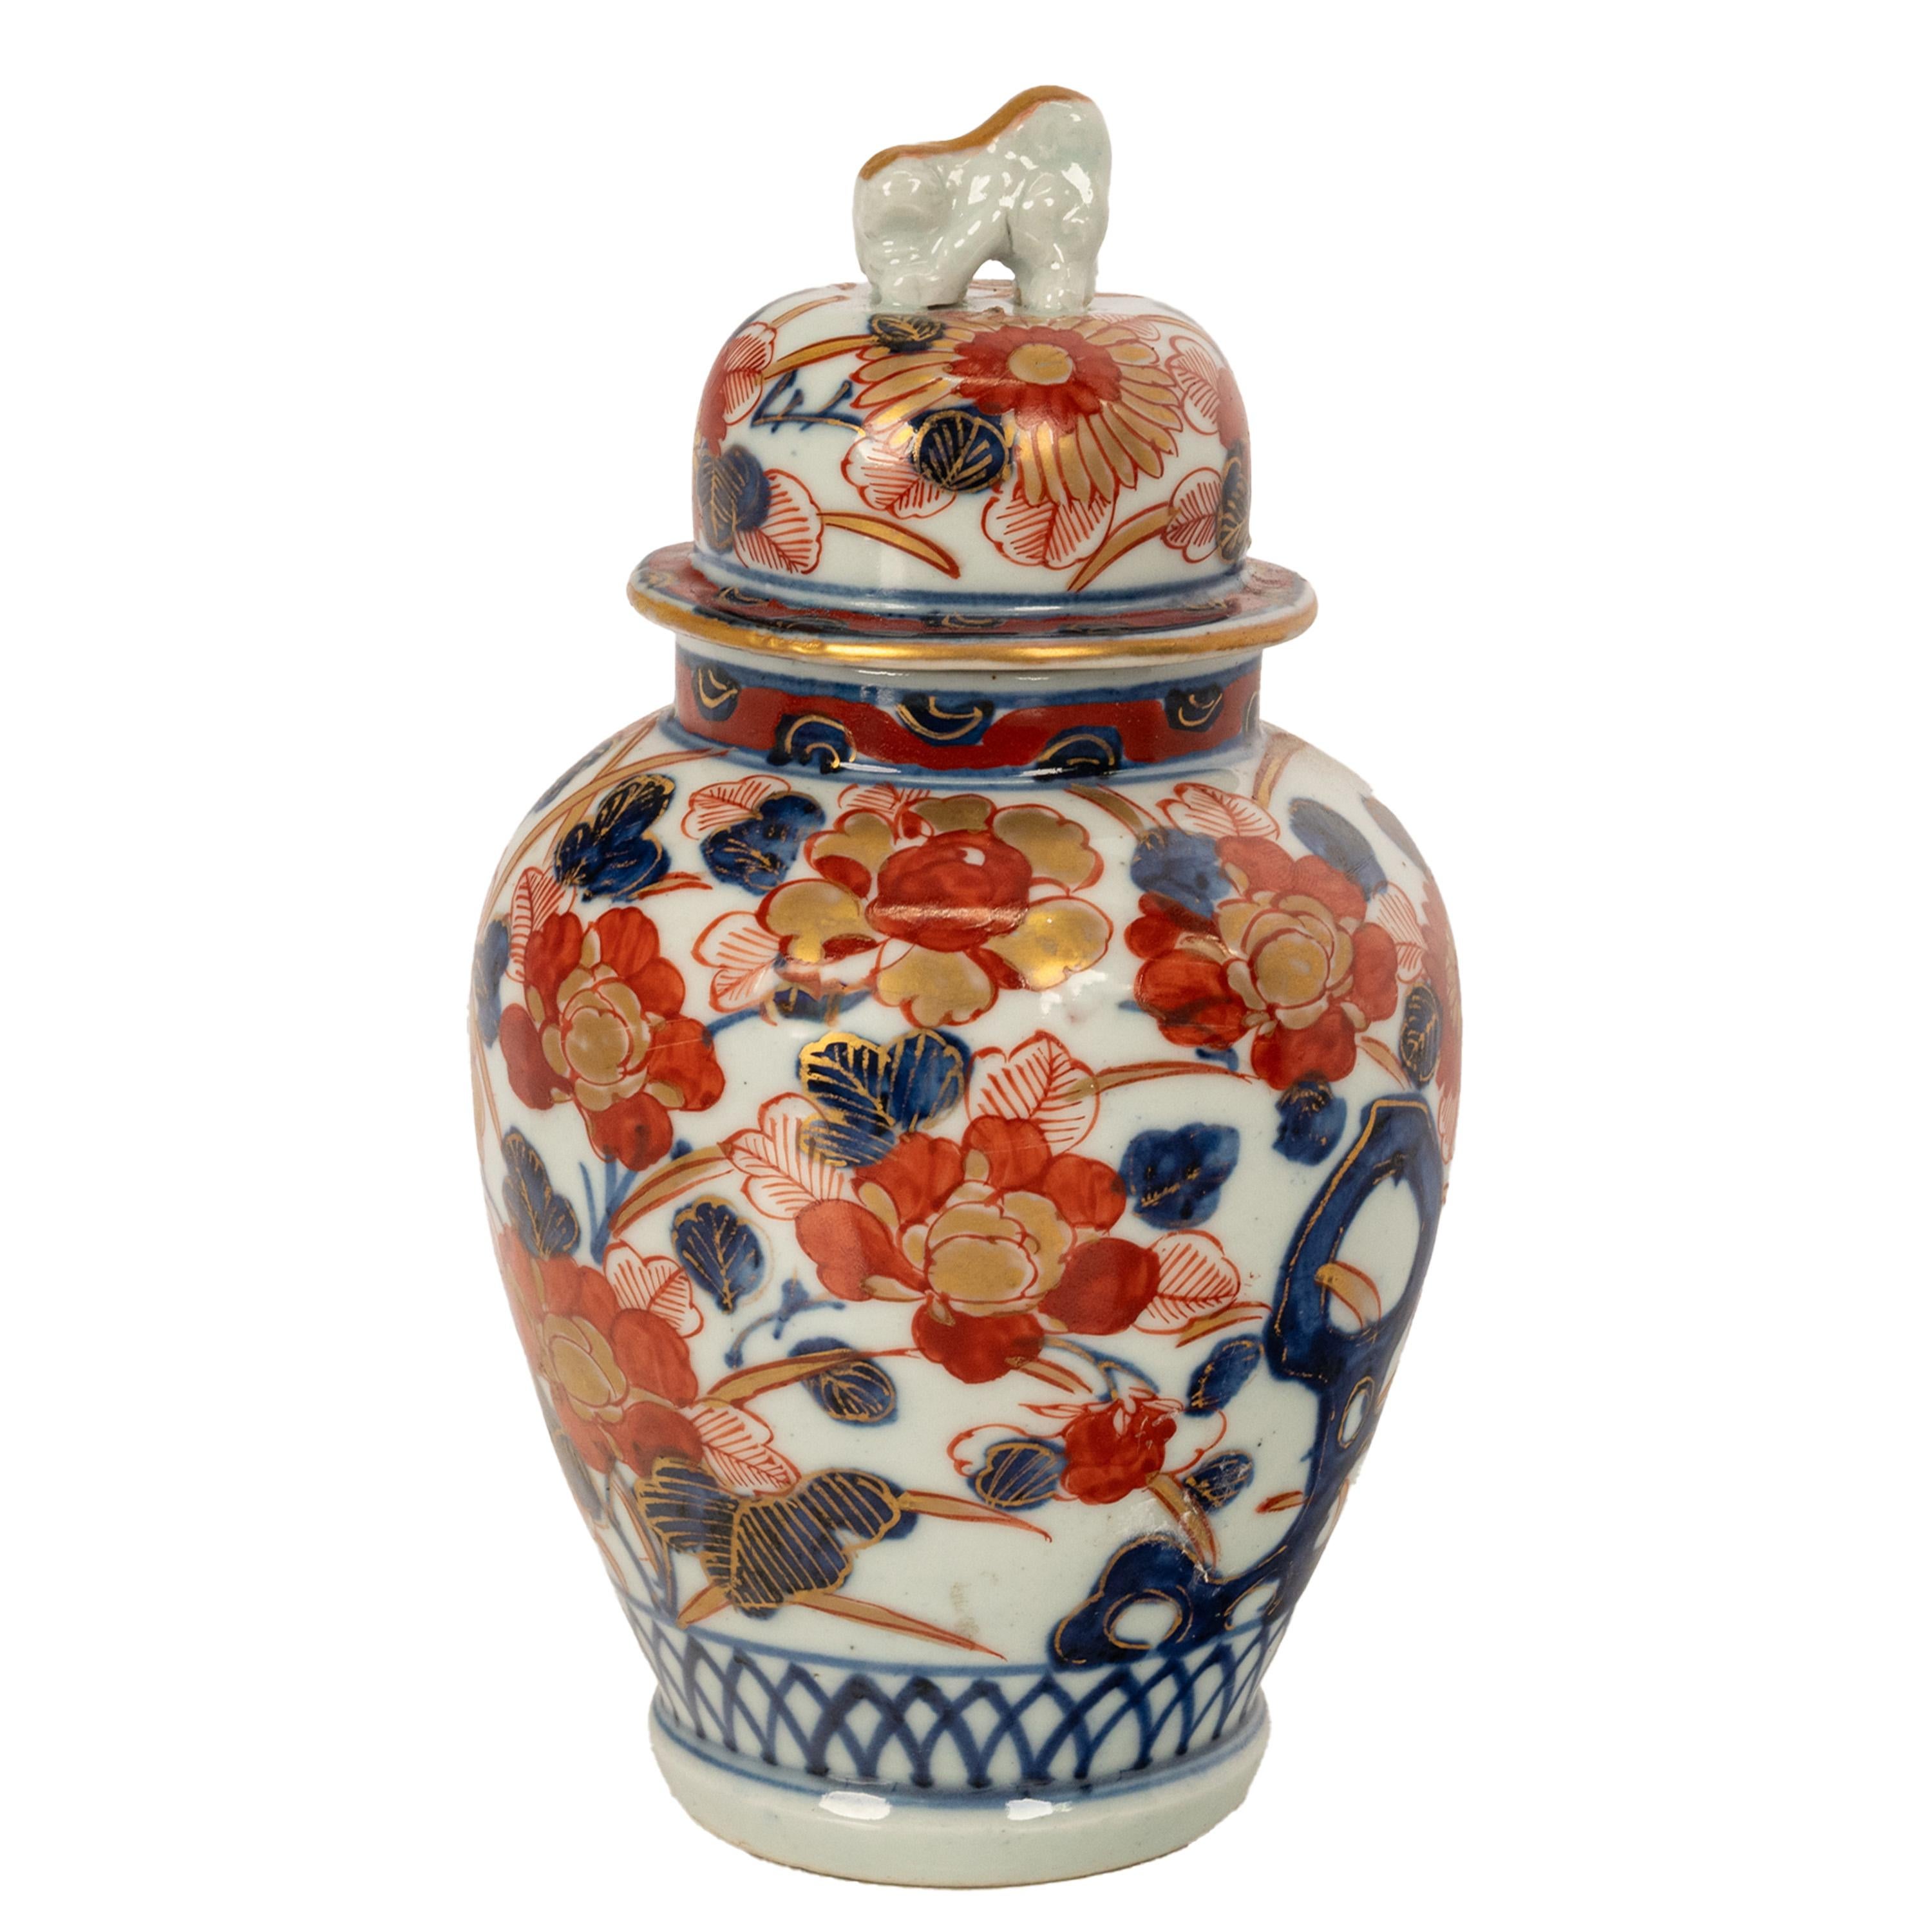 Antique 19thC Japanese Porcelain Meiji Period Imari Lidded Ginger Jar Vase 1890 In Good Condition For Sale In Portland, OR